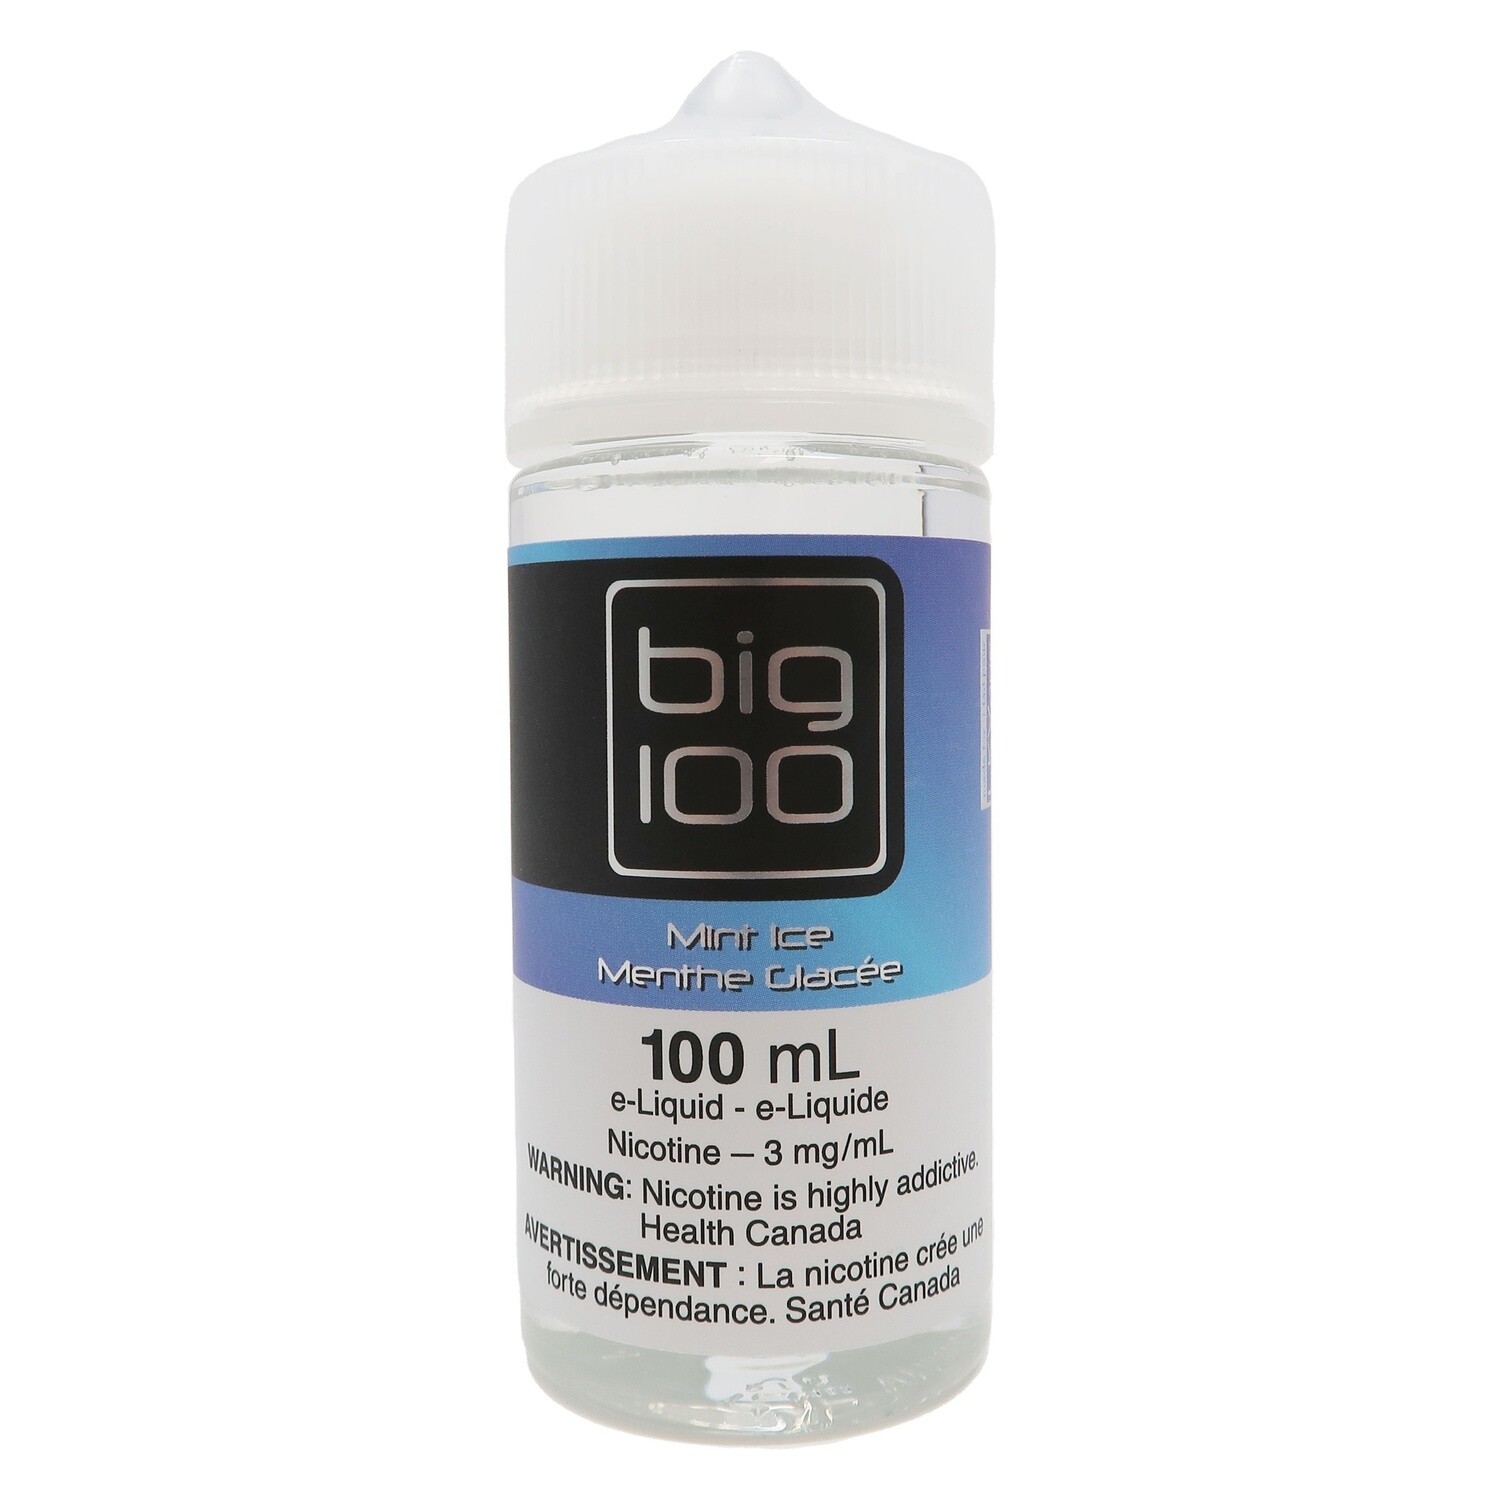 BIG 100 - Mint ICE (100ml) Eliquid